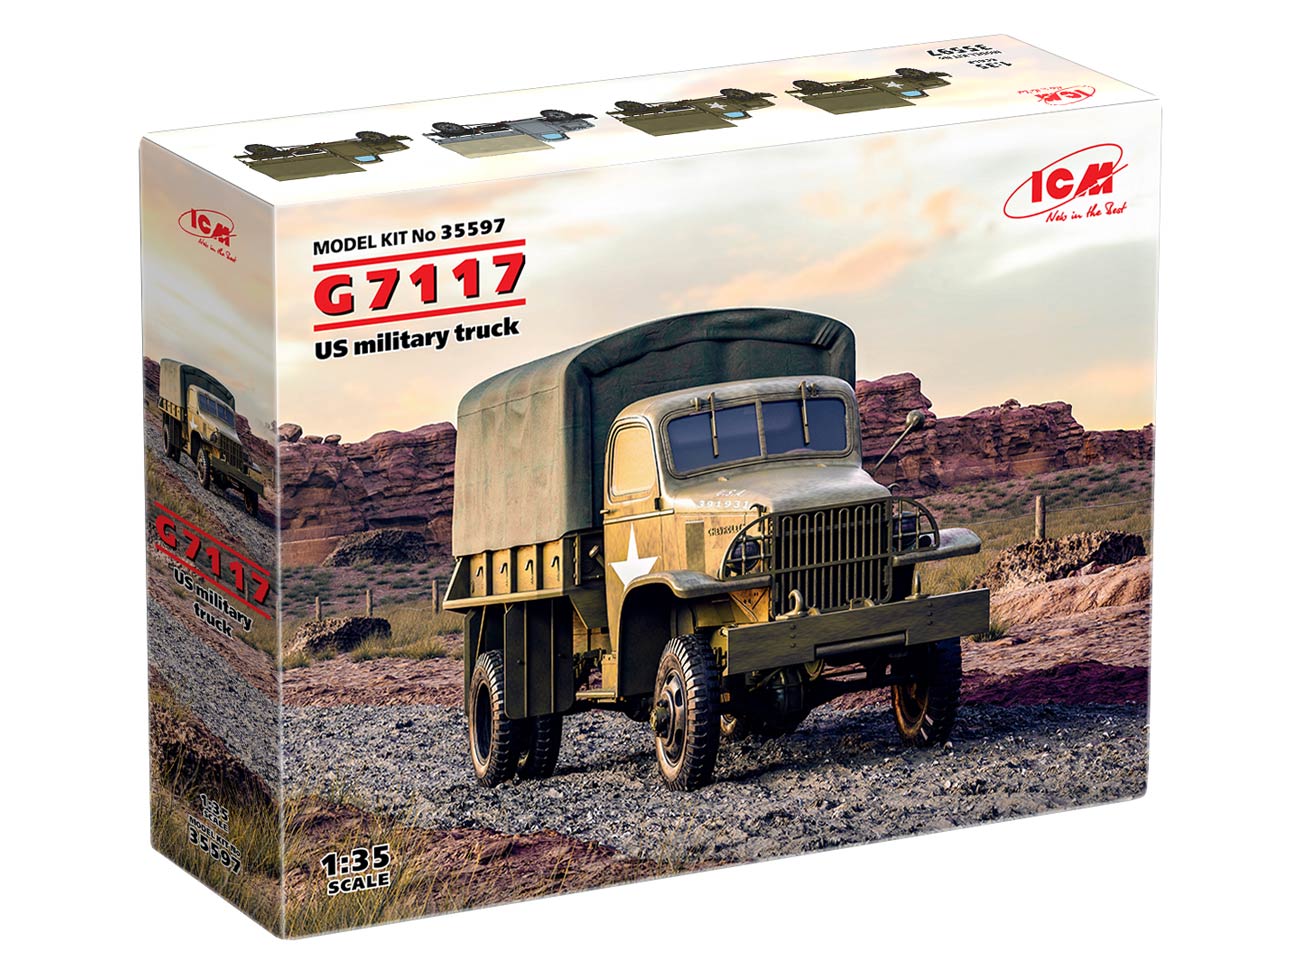 ICM 1:35 G7117 US military truck